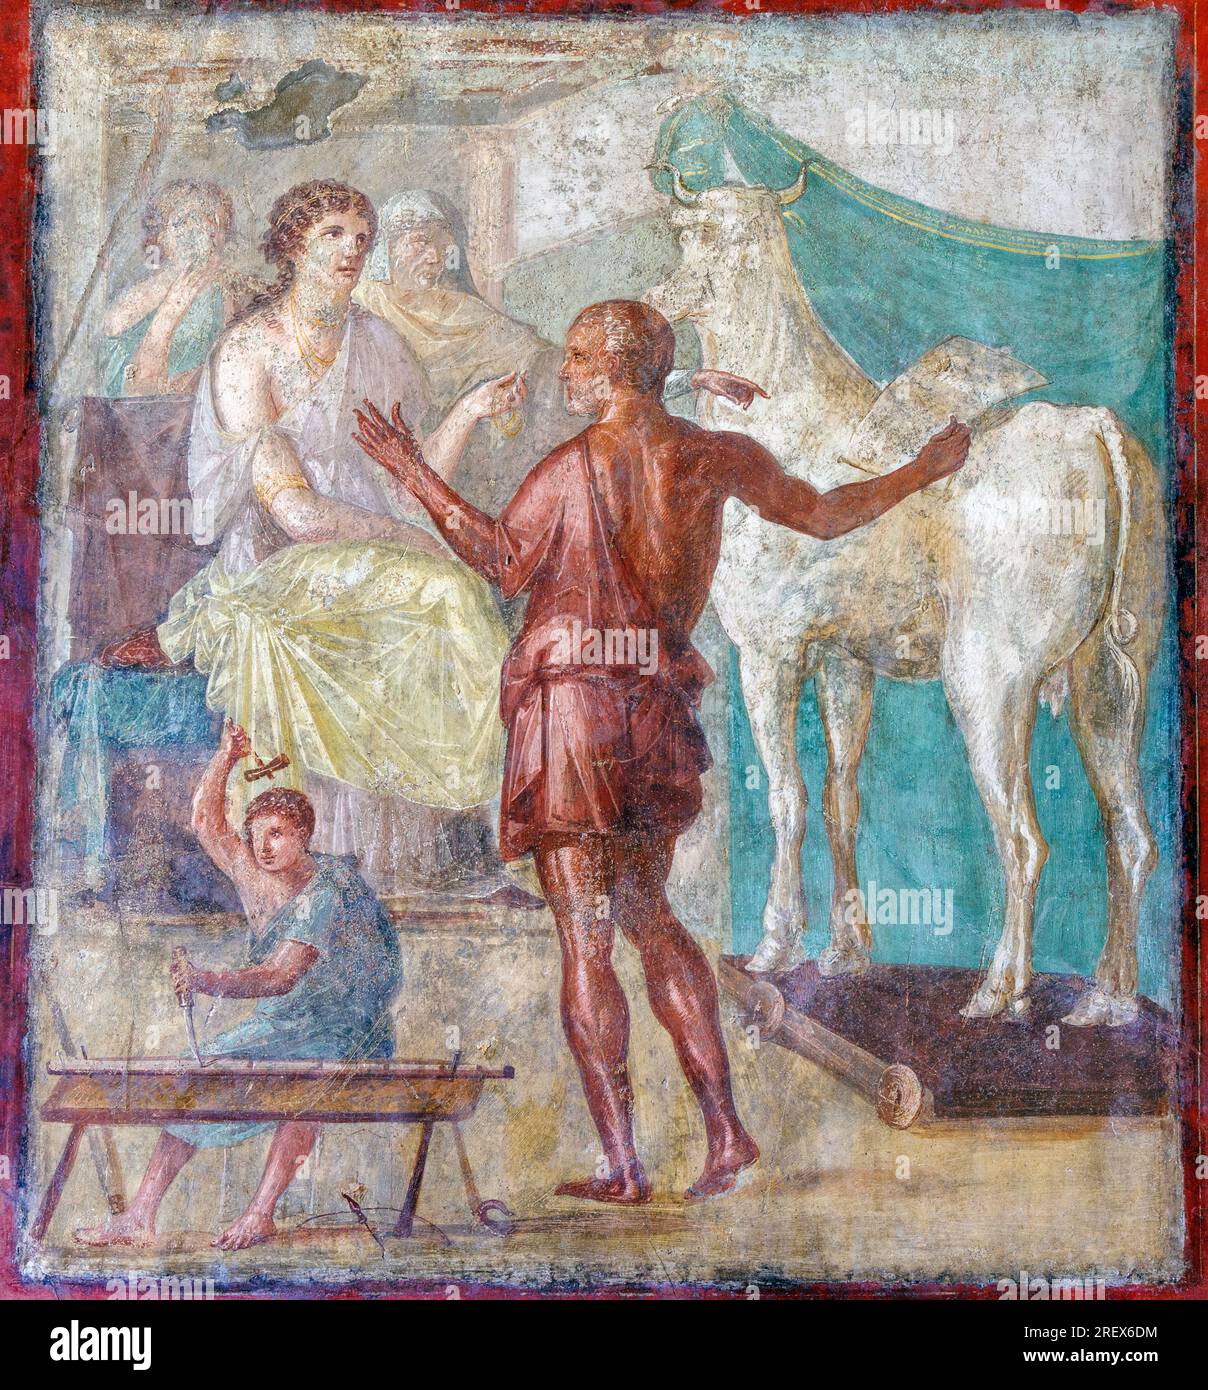 Pompeii Archaeological Site, Campania, Italy.  Fresco illustrating the Greek myth of Daedalus and Pasiphae.  House of the Vettii.  Casa dei Vettii. Stock Photo